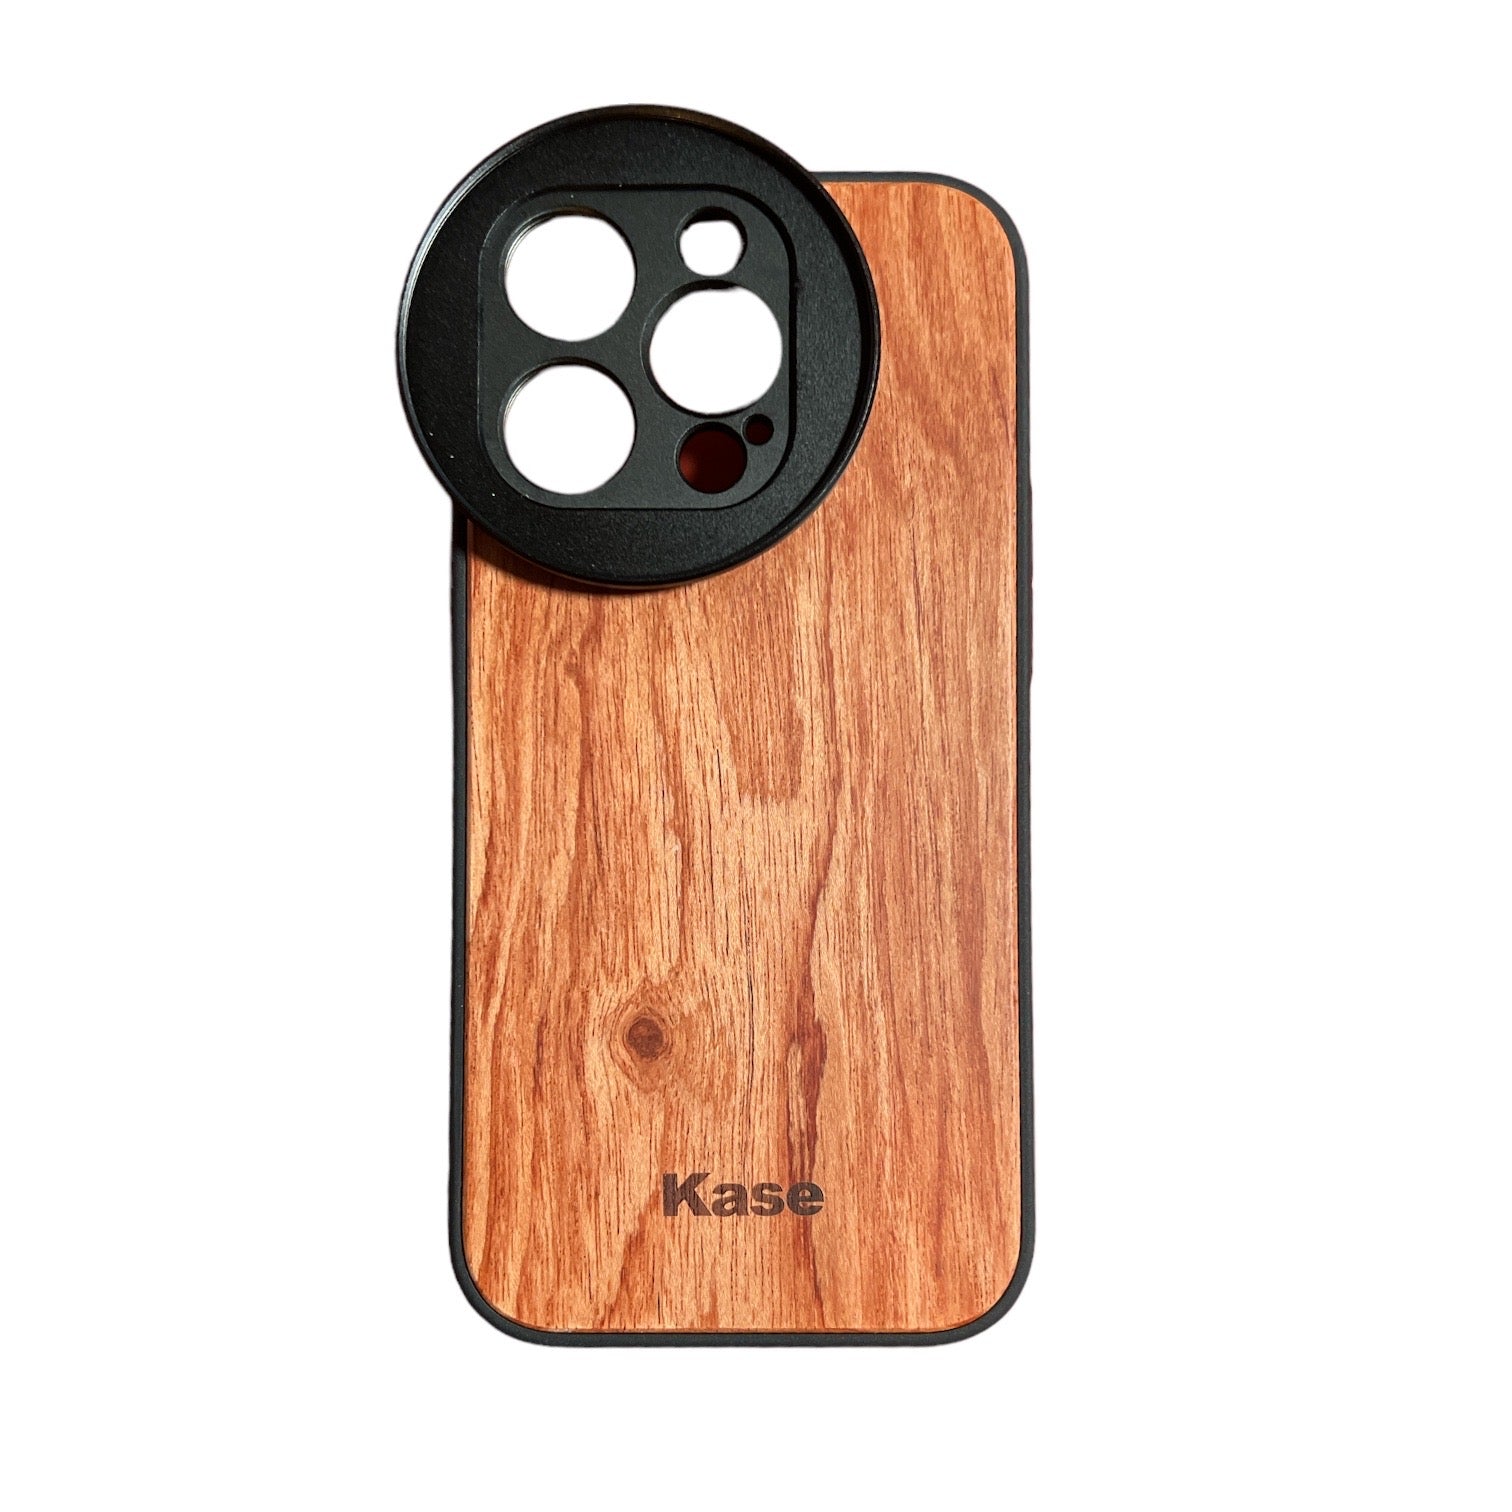 Kase Lens Case for iPhone 14 Pro Max